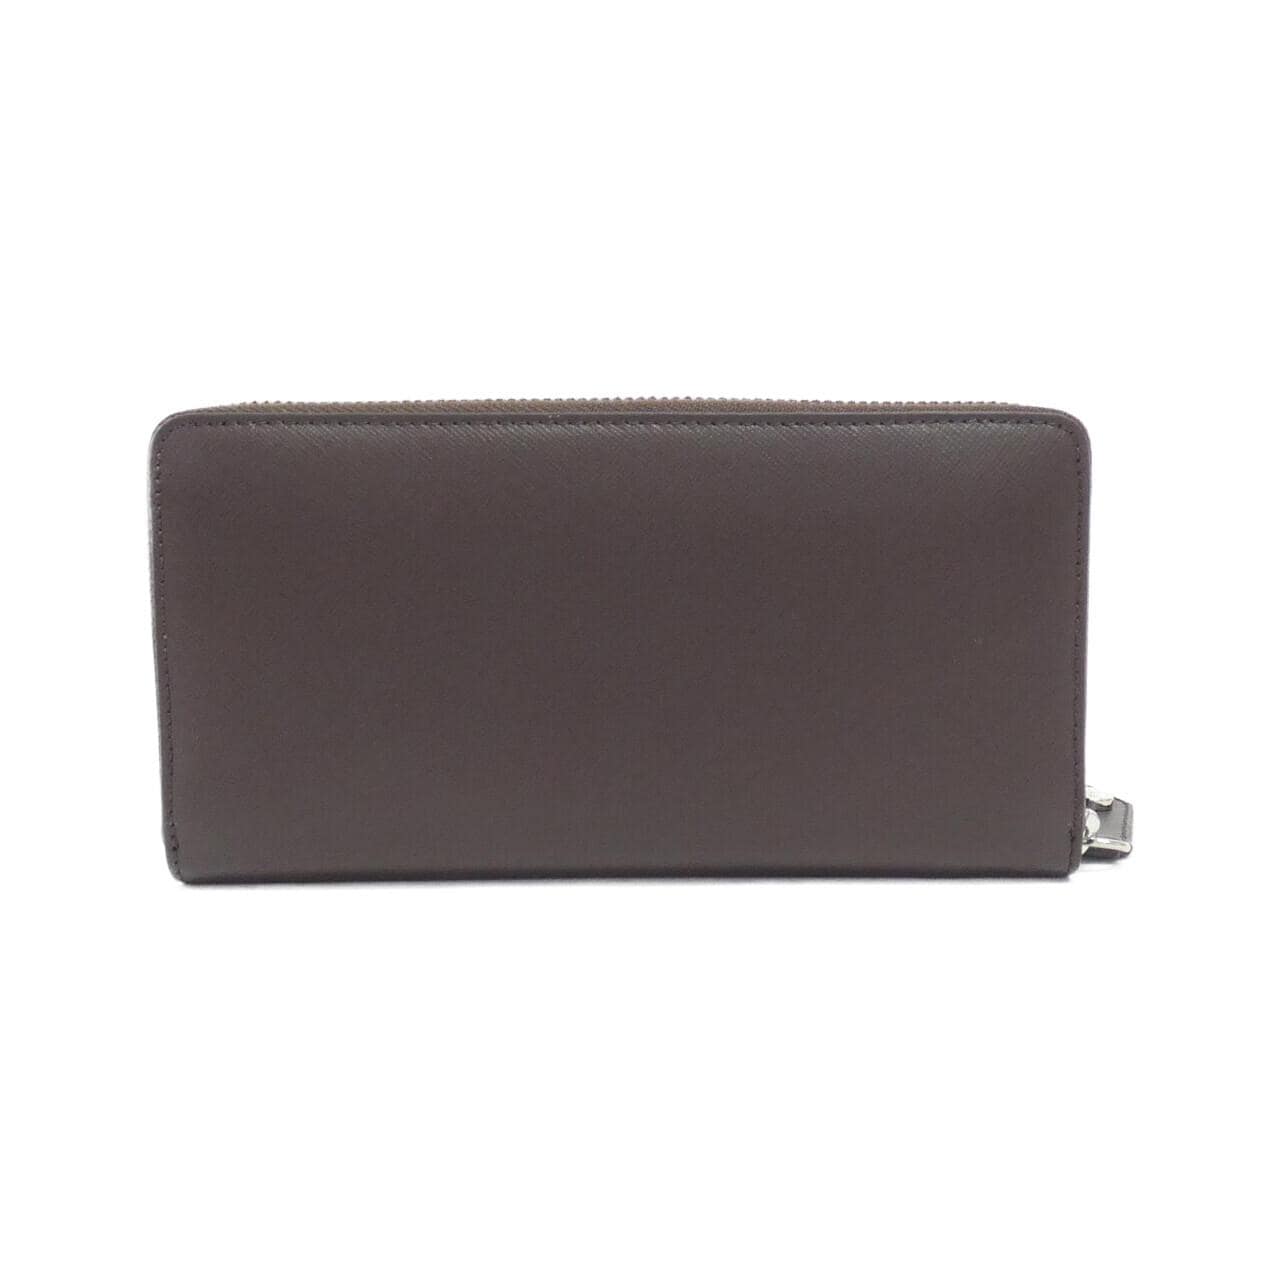 [BRAND NEW] Vivienne Westwood KENT Zip Round Wallet 51050022 Wallet